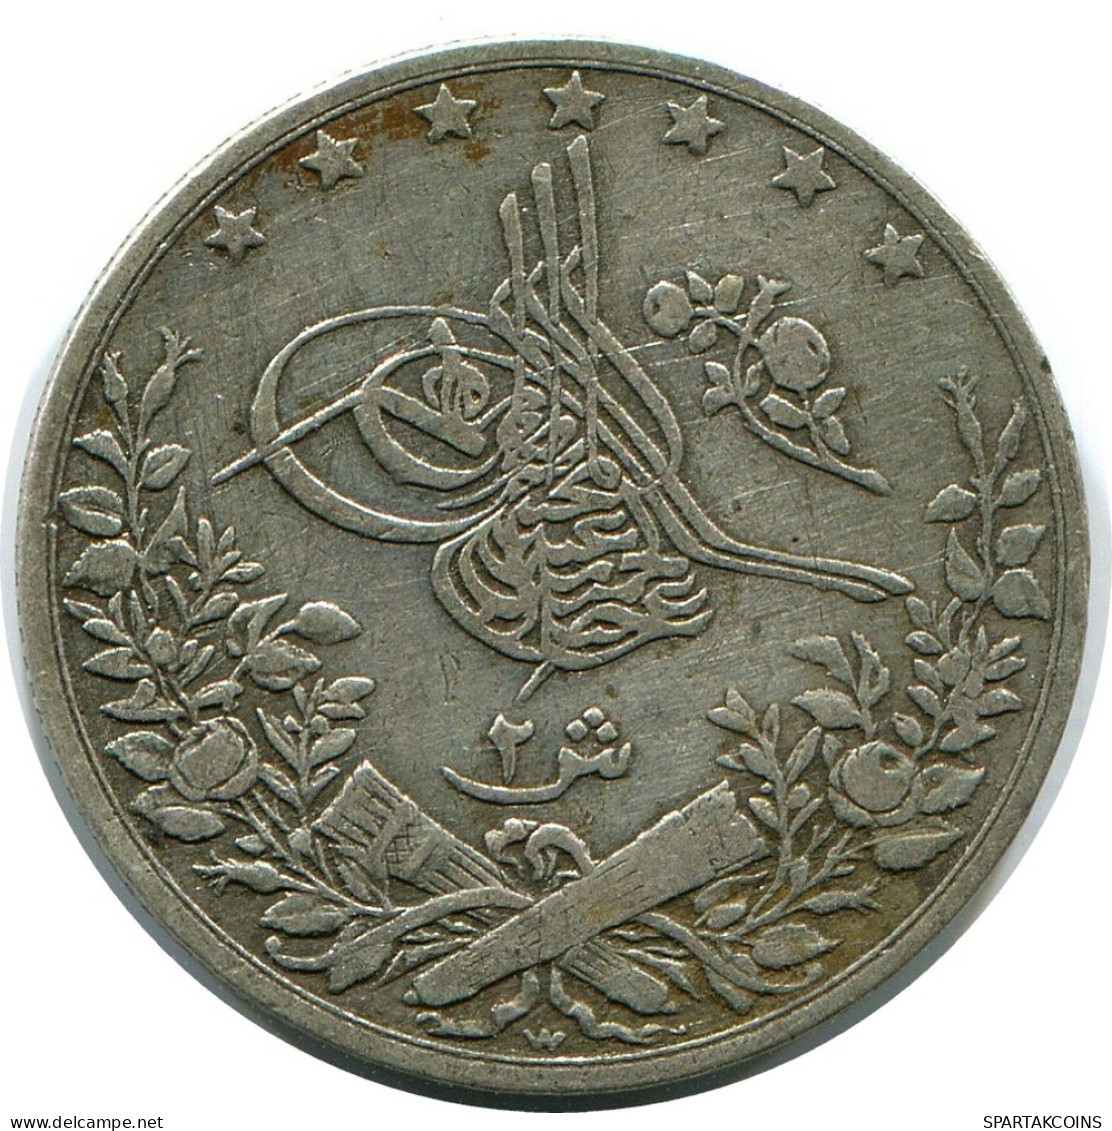 2 QIRSH 1894 EGIPTO EGYPT Islámico Moneda #AH283.10.E - Egypt